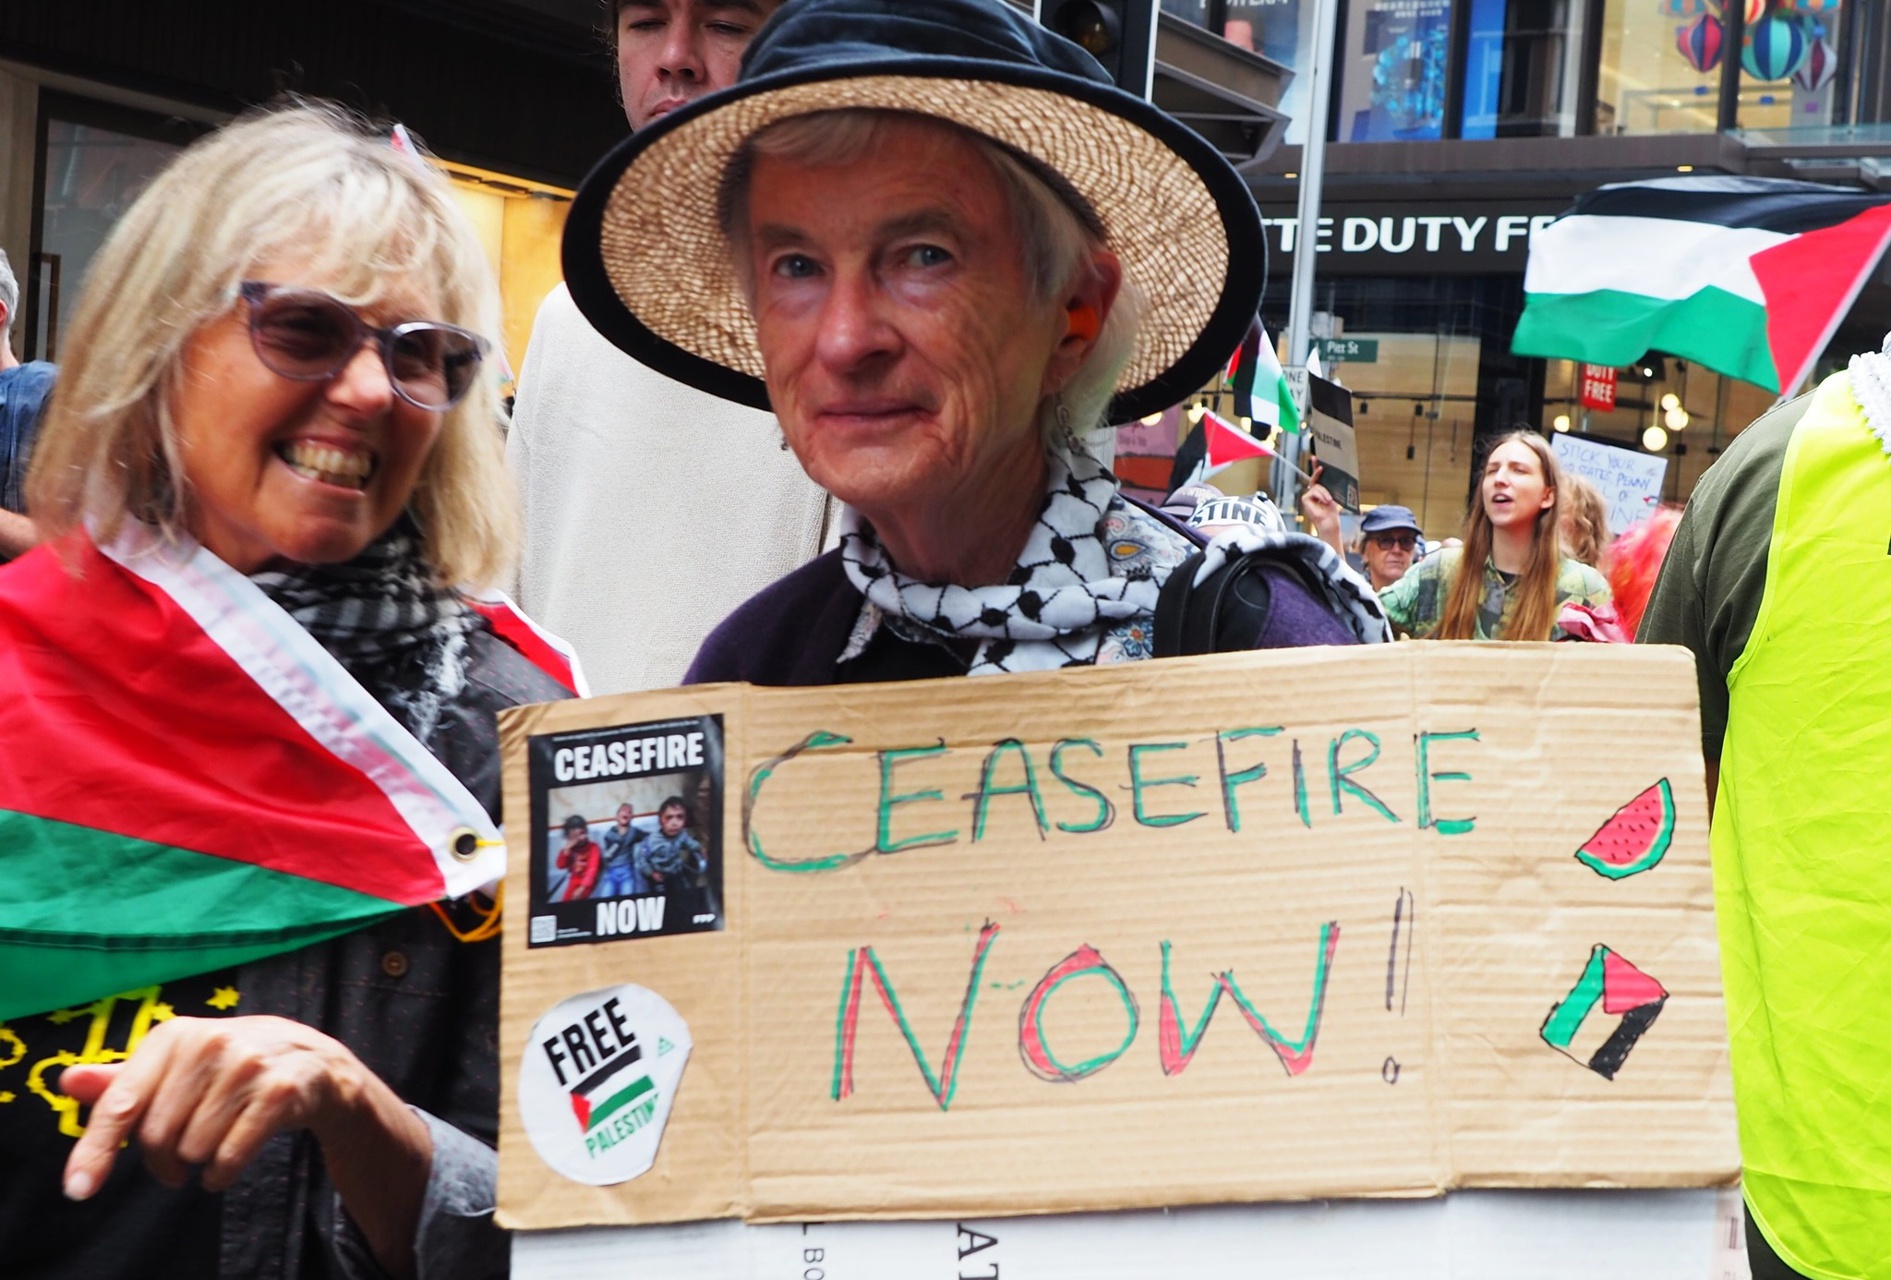 Ceasefire now, Gadigal/Sydney, April 21